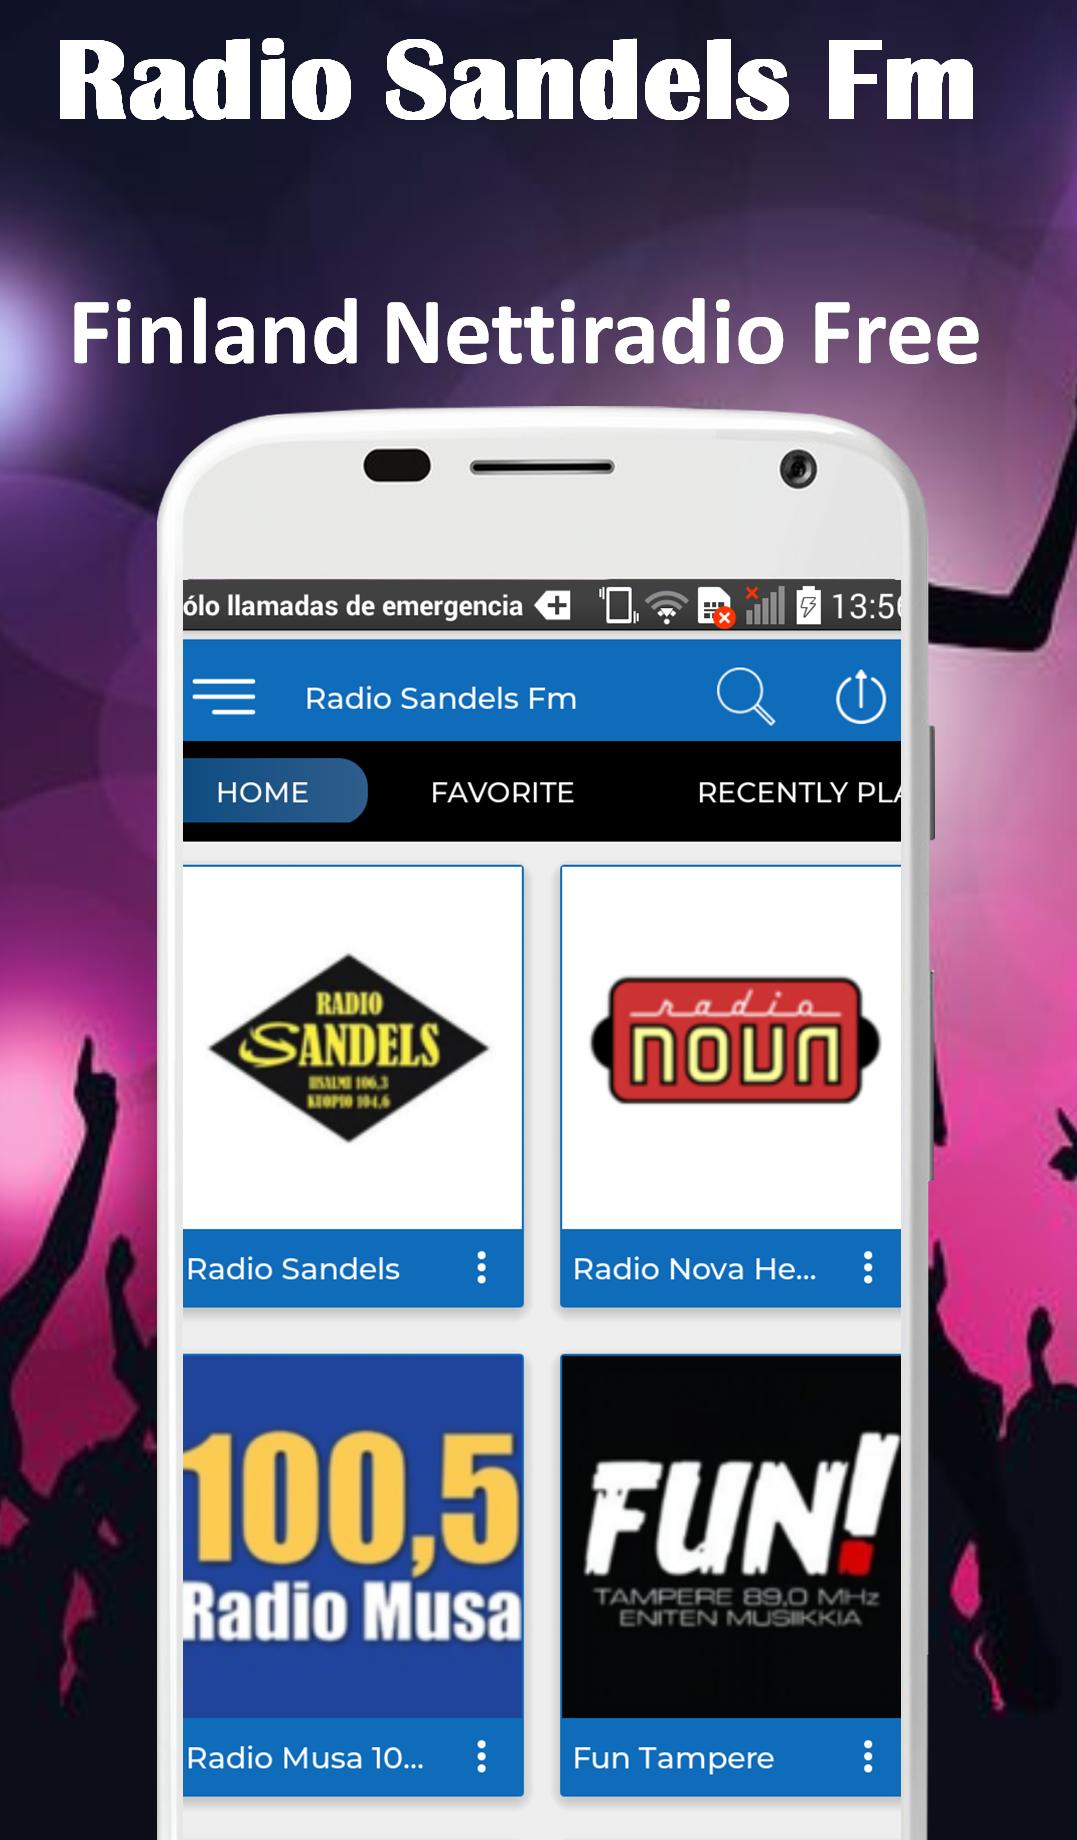 Radio Sandels Fm Finland Nettiradio Free APK voor Android Download